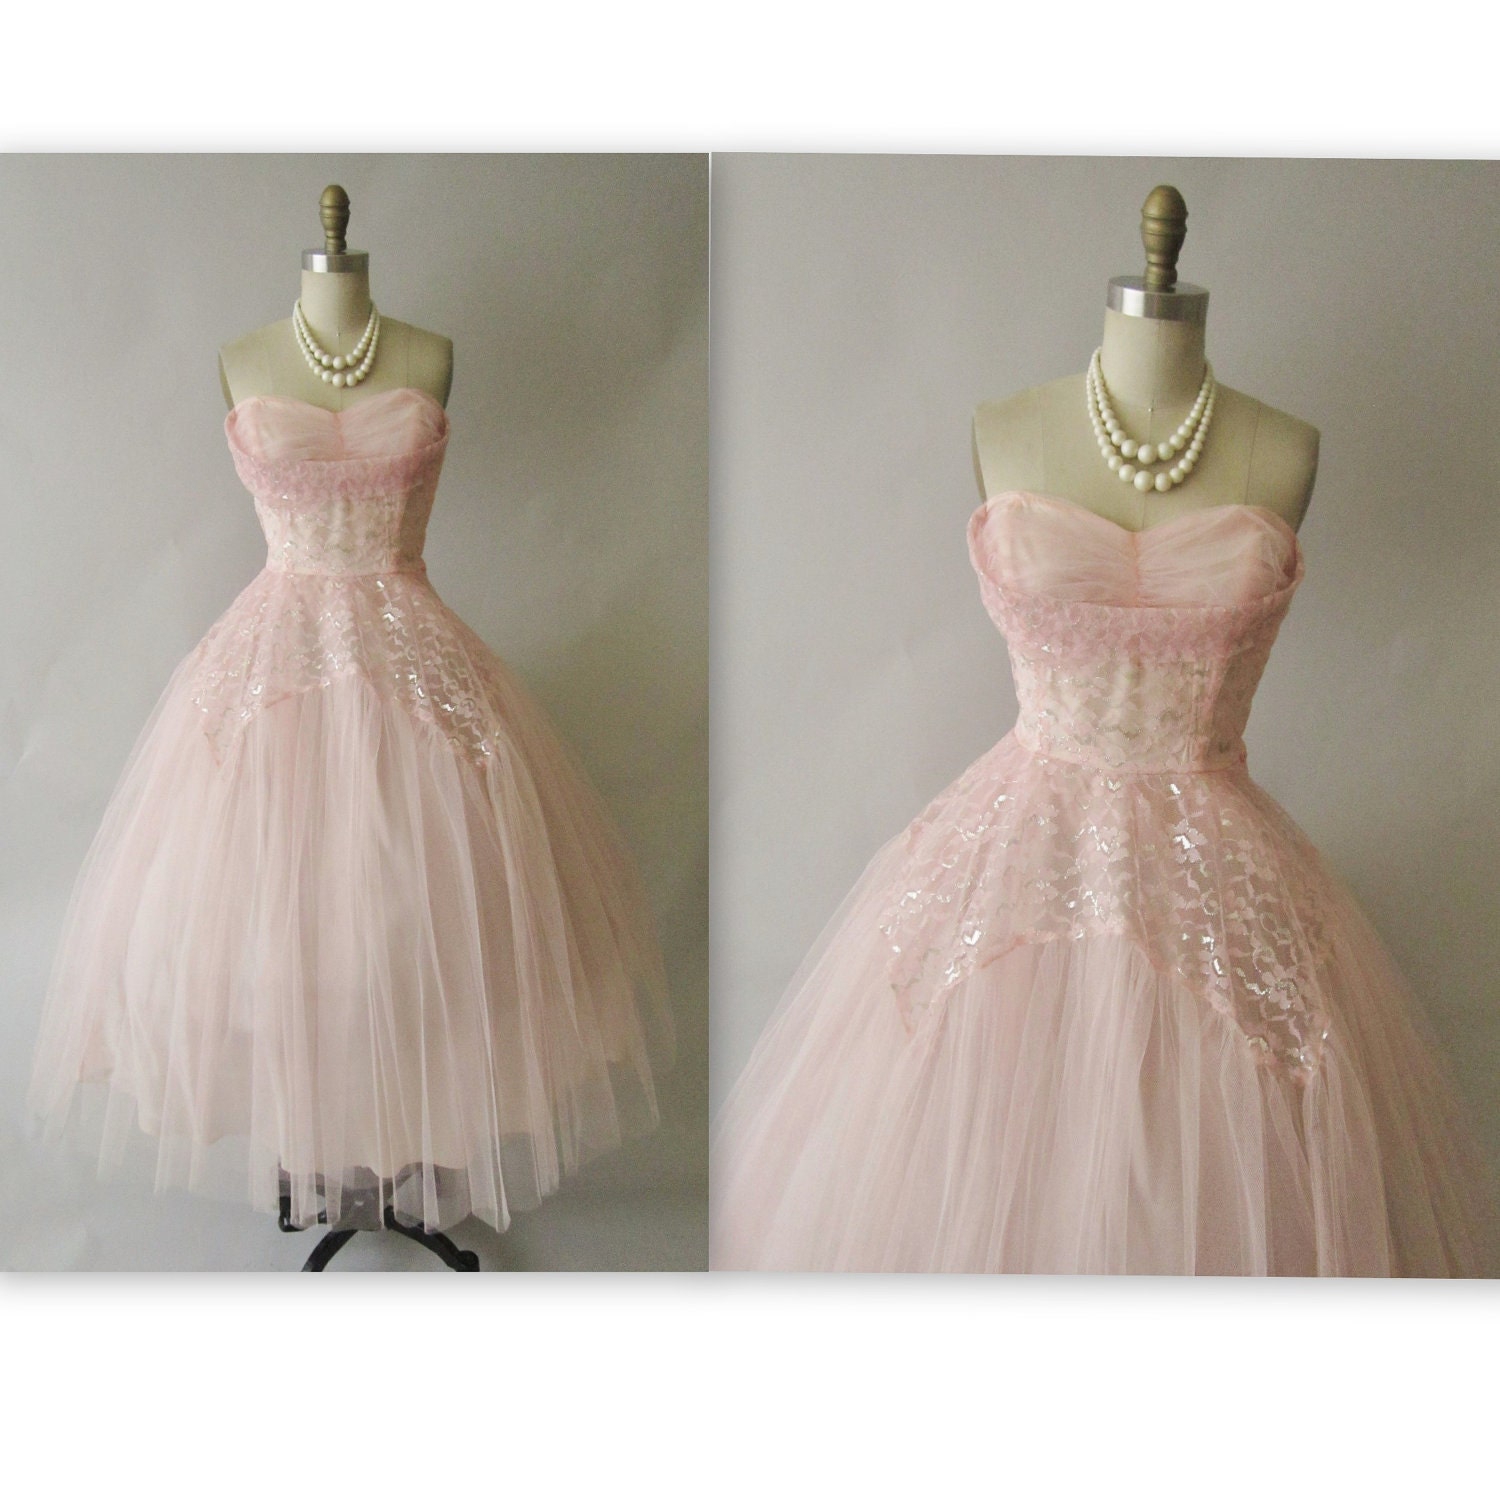 Old Prom Dresses 55